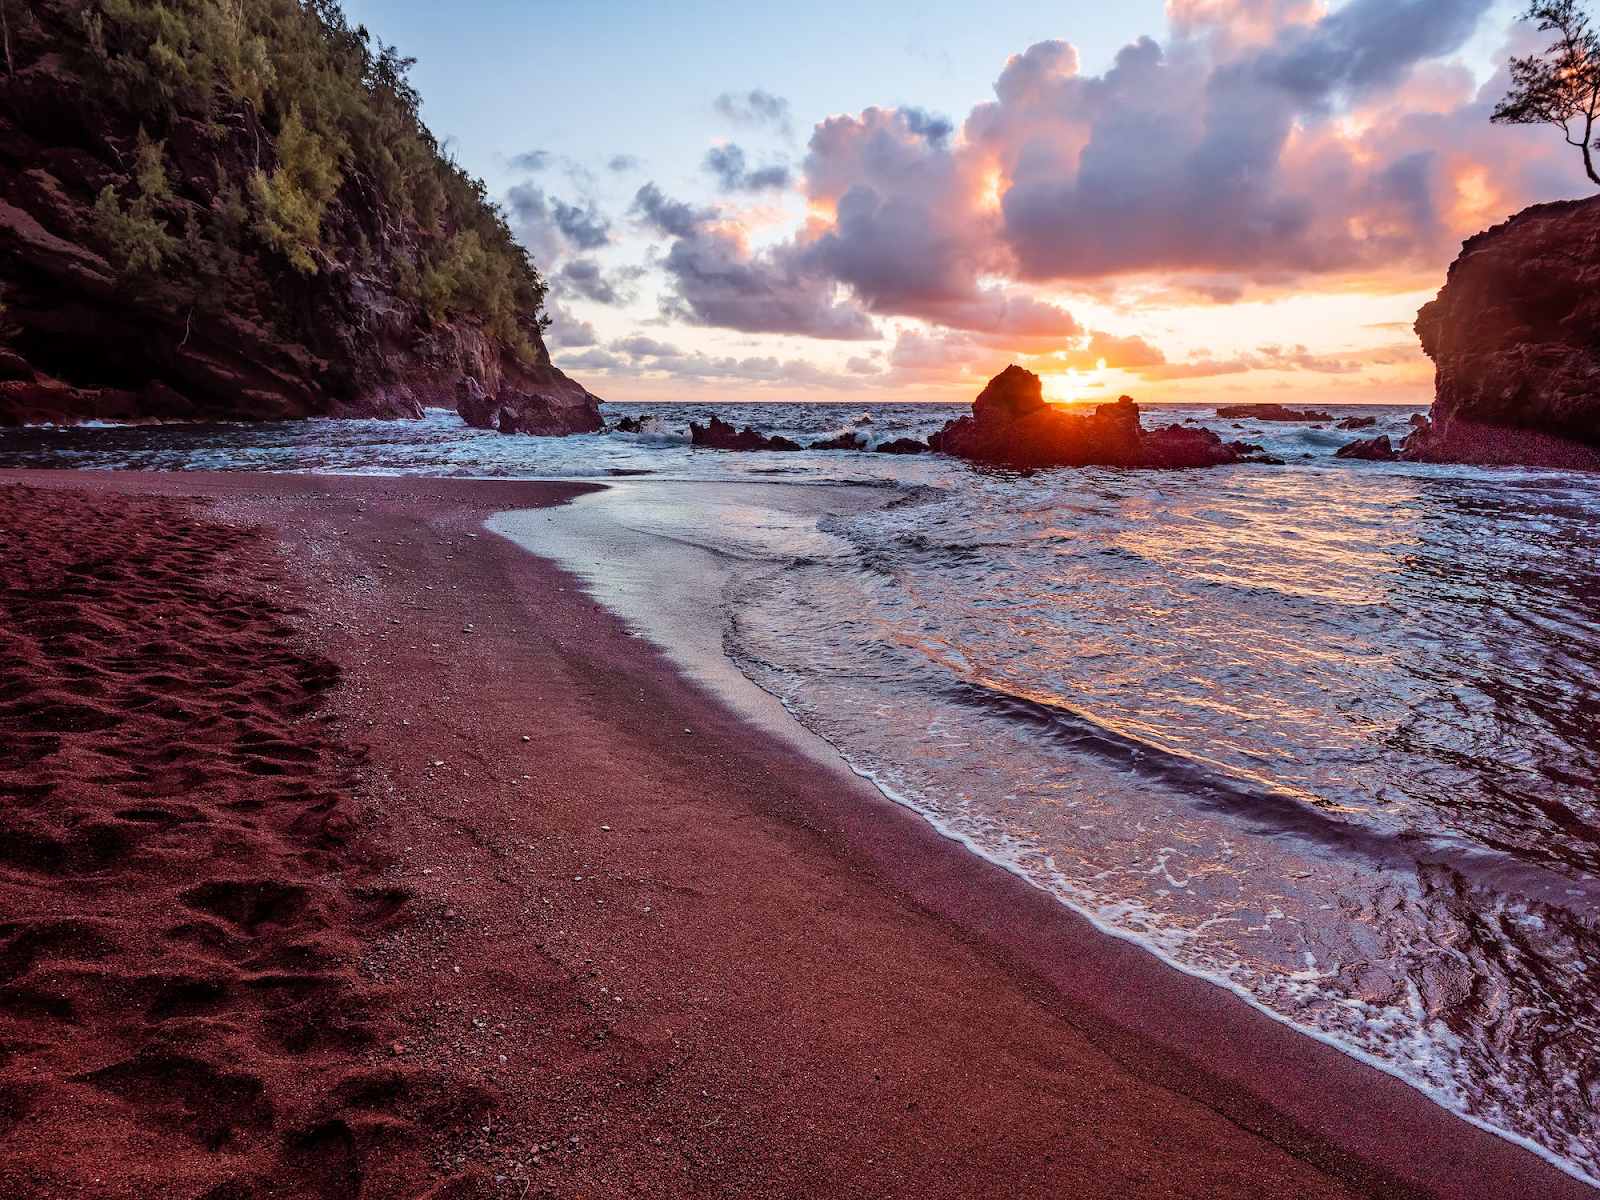 Enjoy the breathtaking views of Maui Island, Hawaii